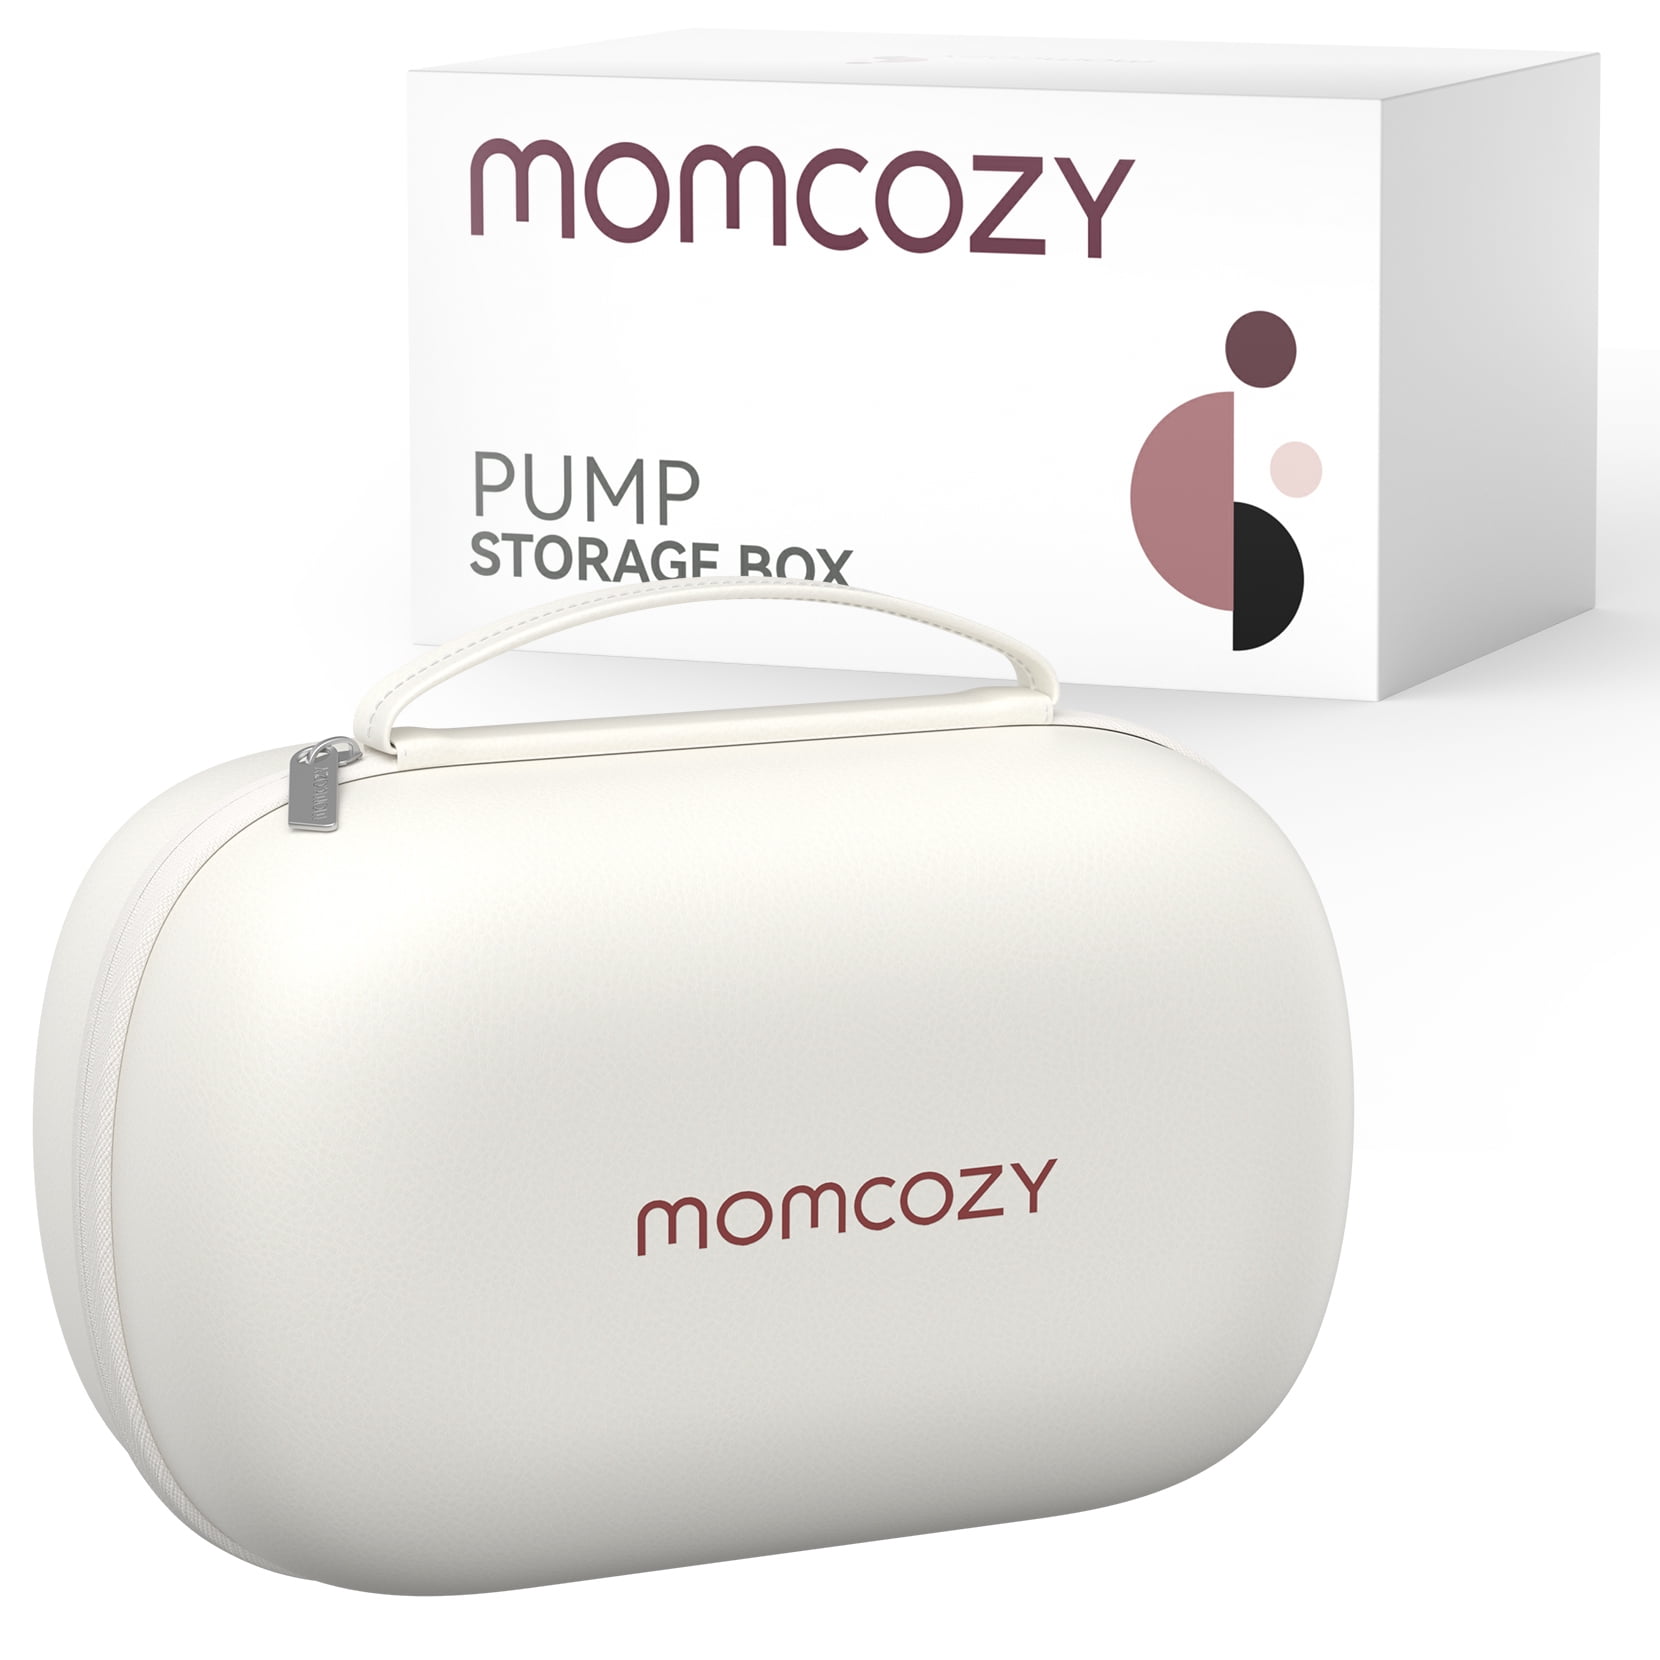 Momcozy M5 Review — Genuine Lactation